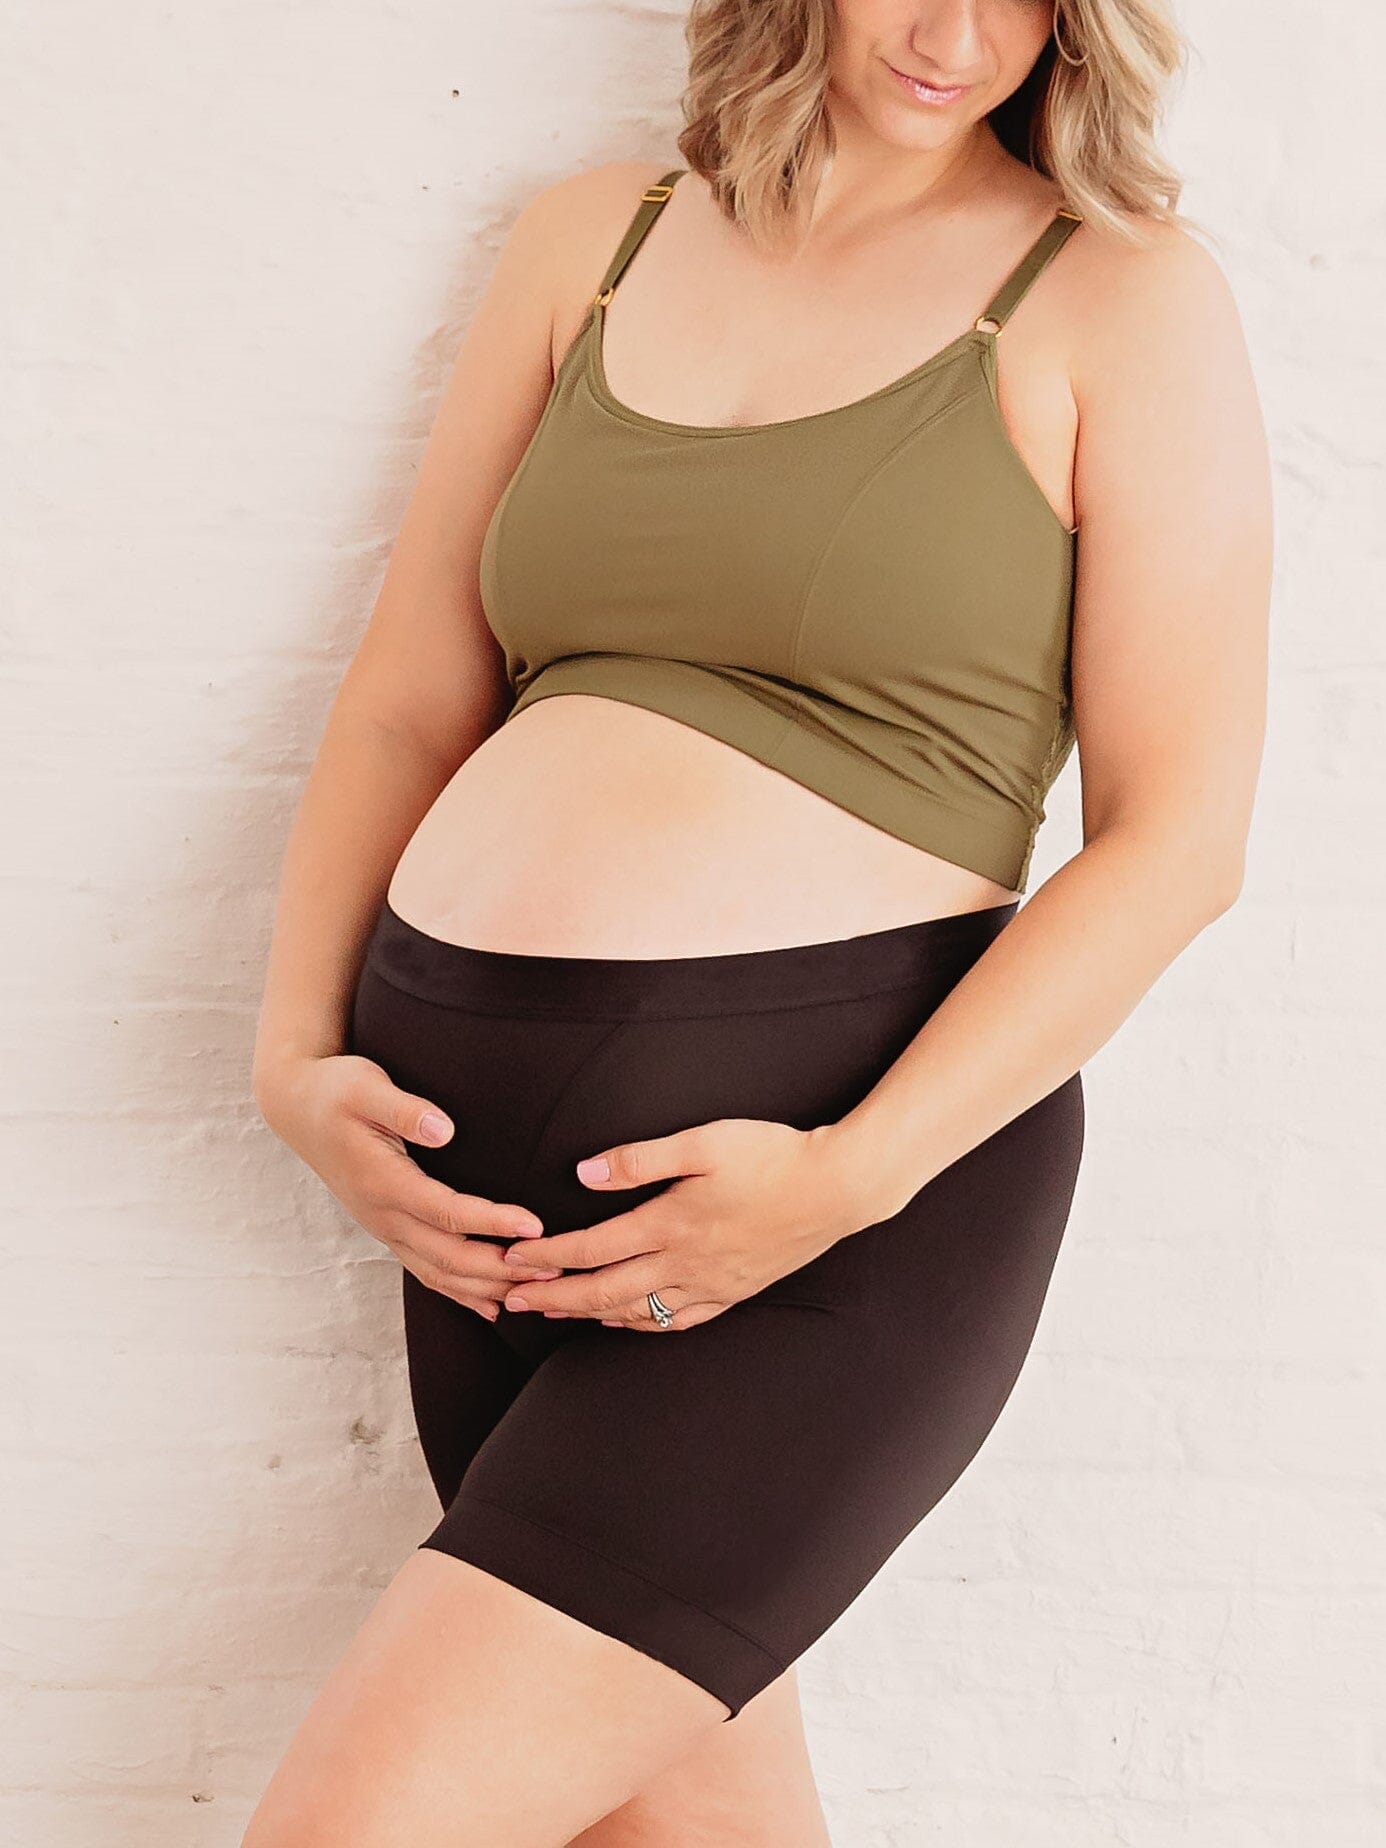 HEALLILY 3pcs Panties Maternity Briefs Disposable Reusable Short